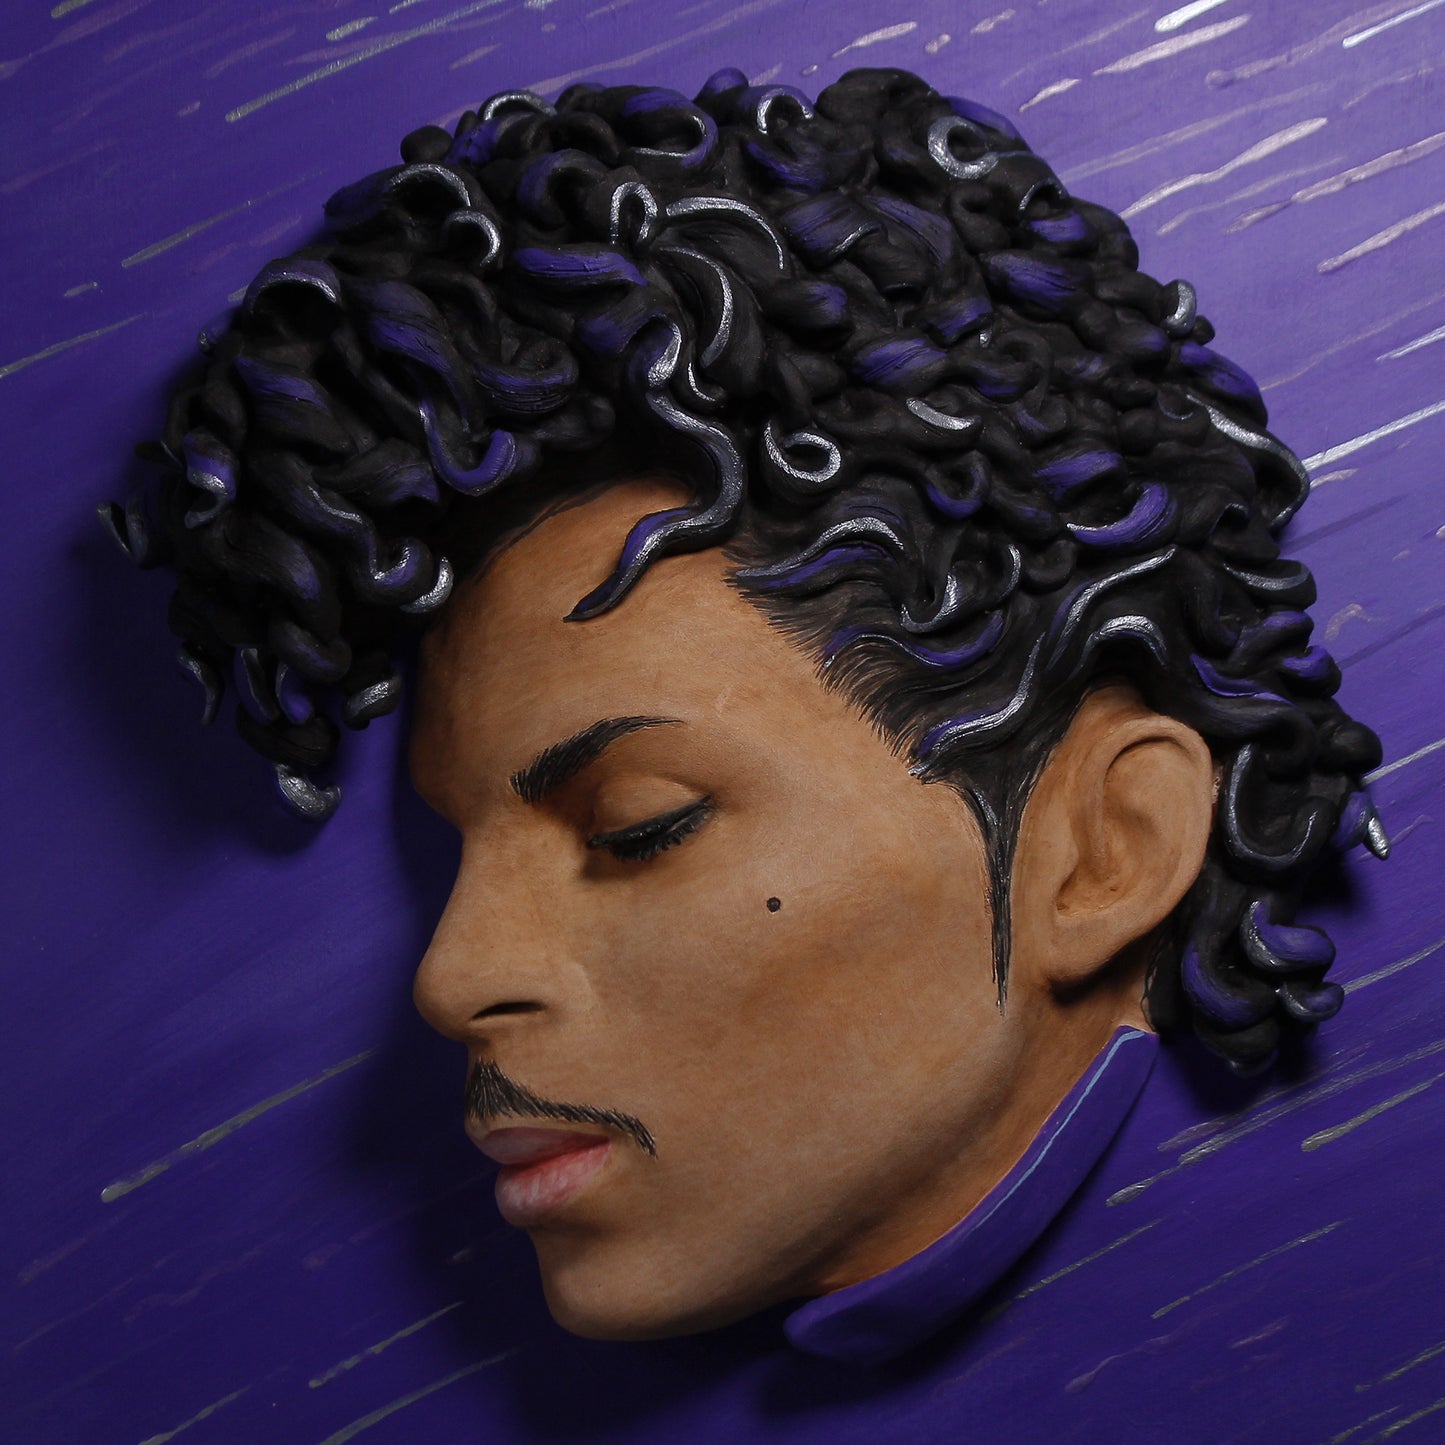 Prince - Purple Rain 3D Wall Panel Sculpture